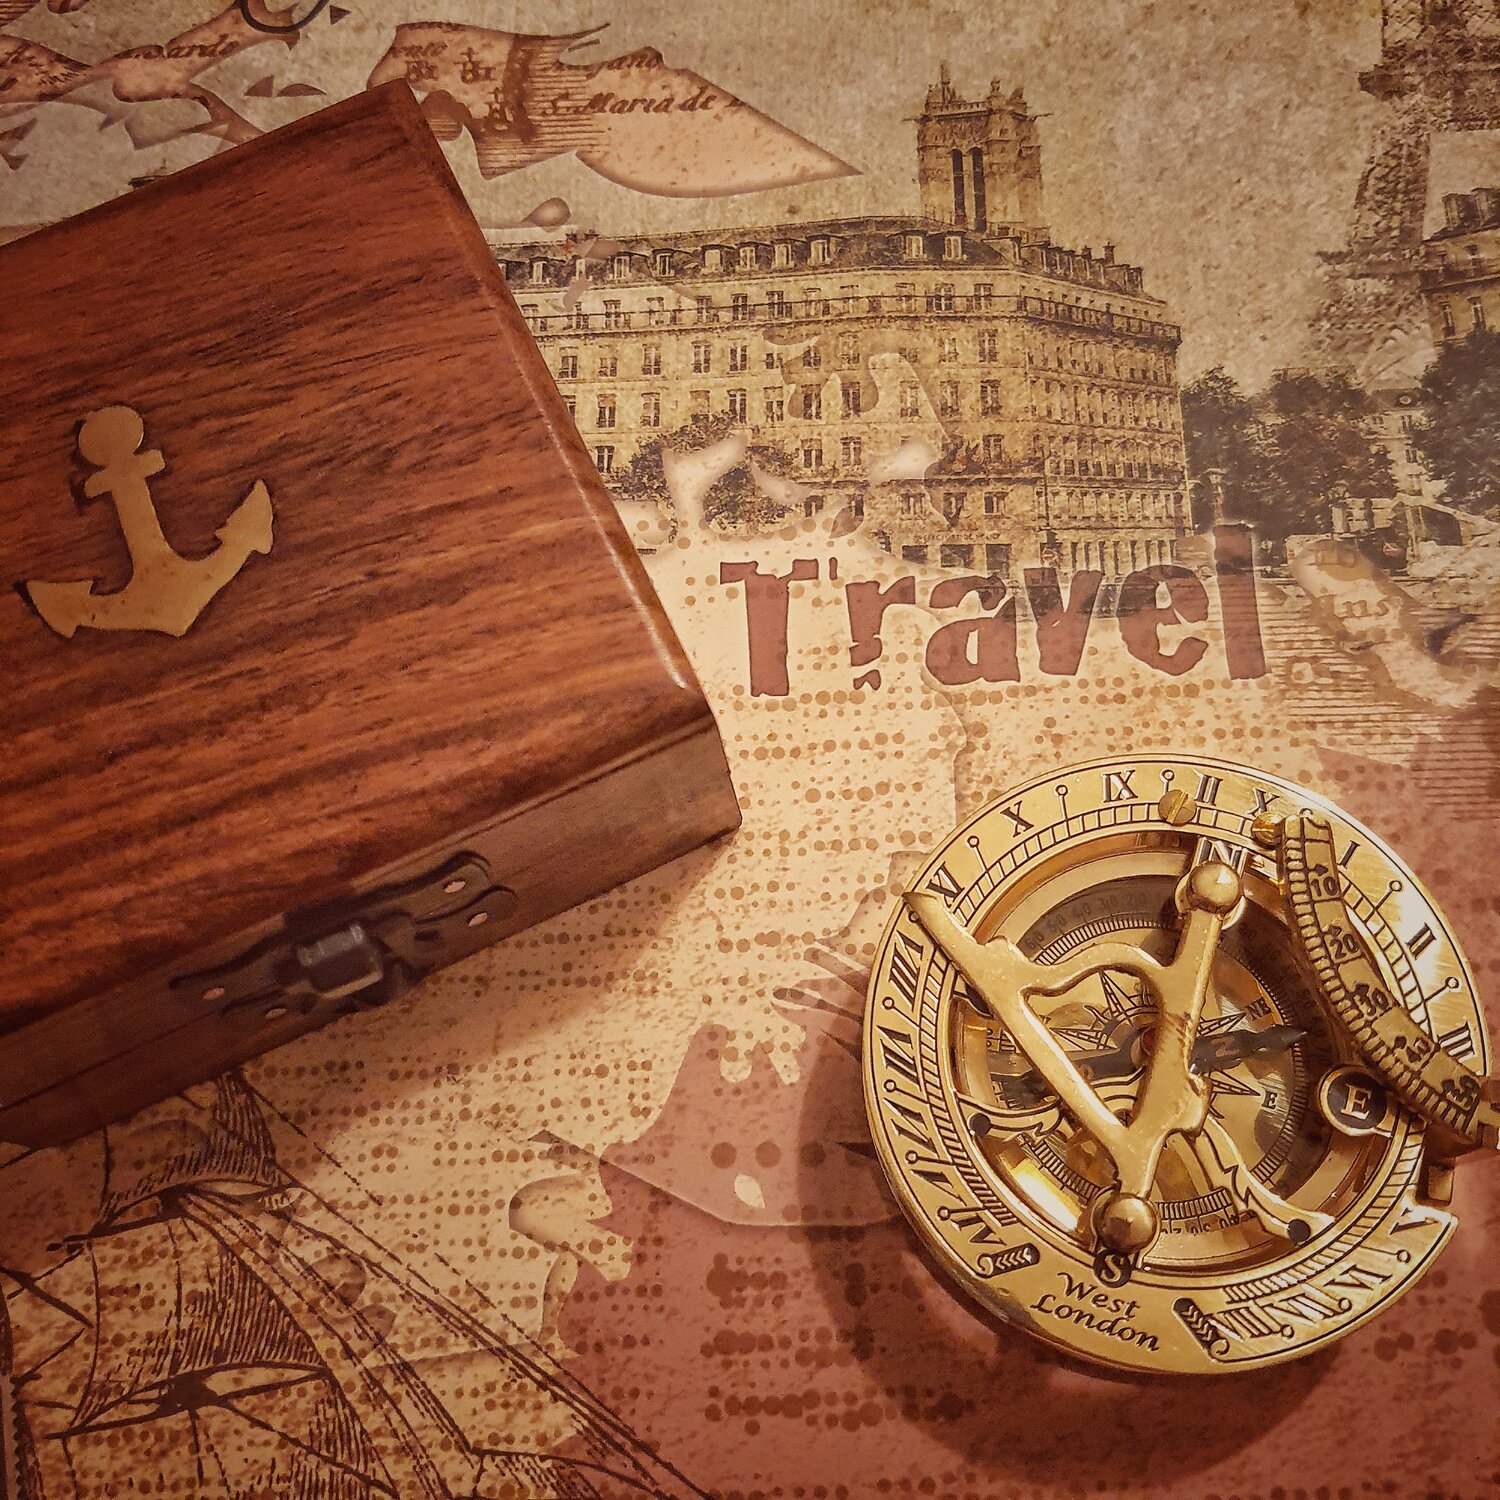 Nautical 3 Brass Sundial Compass, Compasses, Antique Vintage